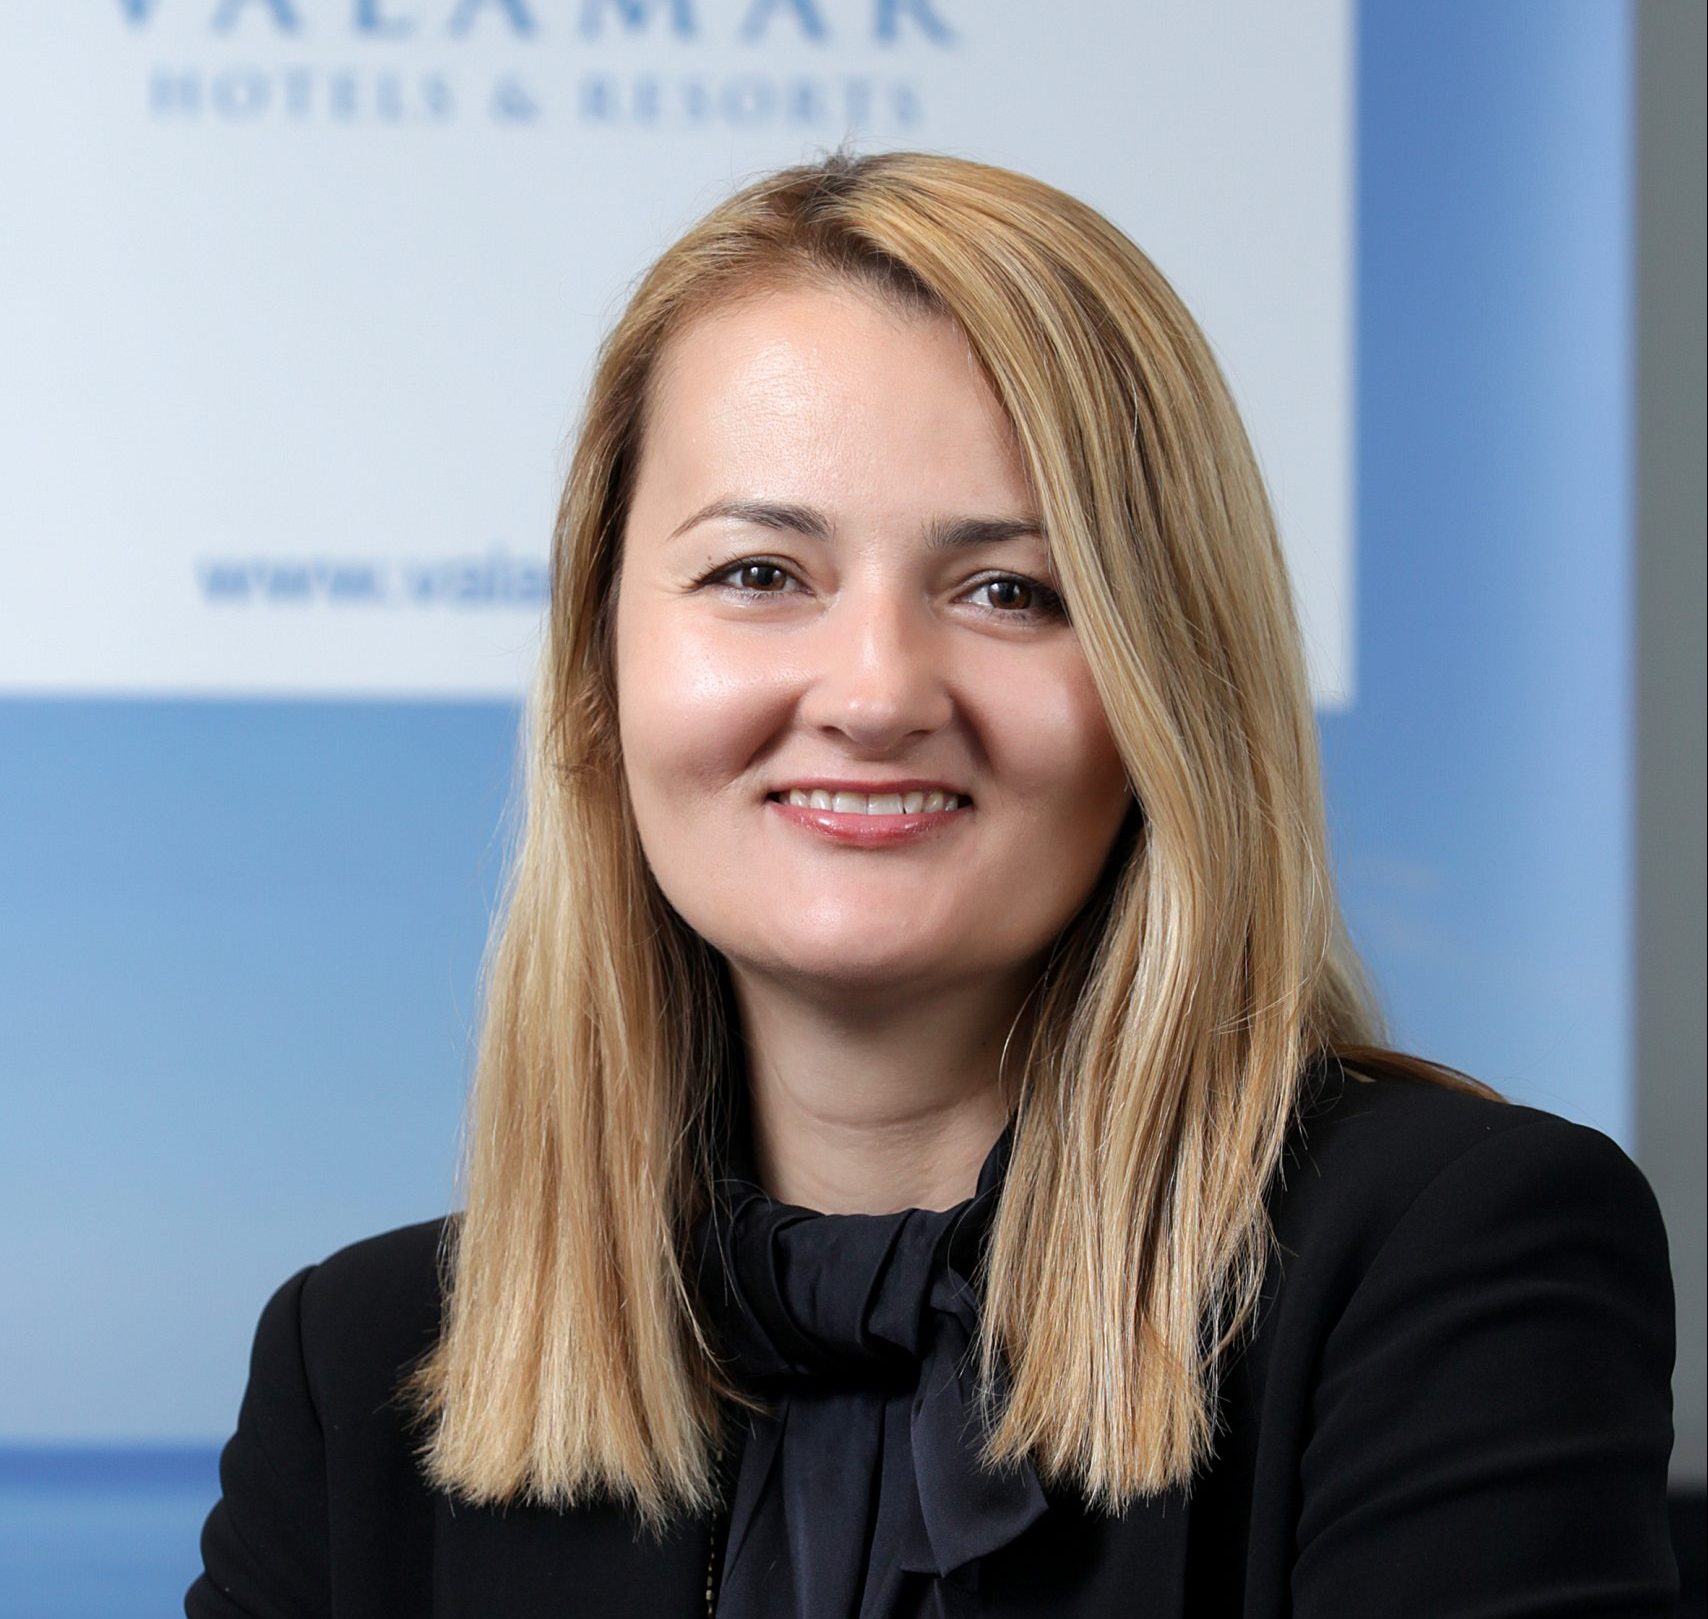 Ivana Budin Arhanić, Vice President of Business Development and Corporate Affairs, Valamar Riviera